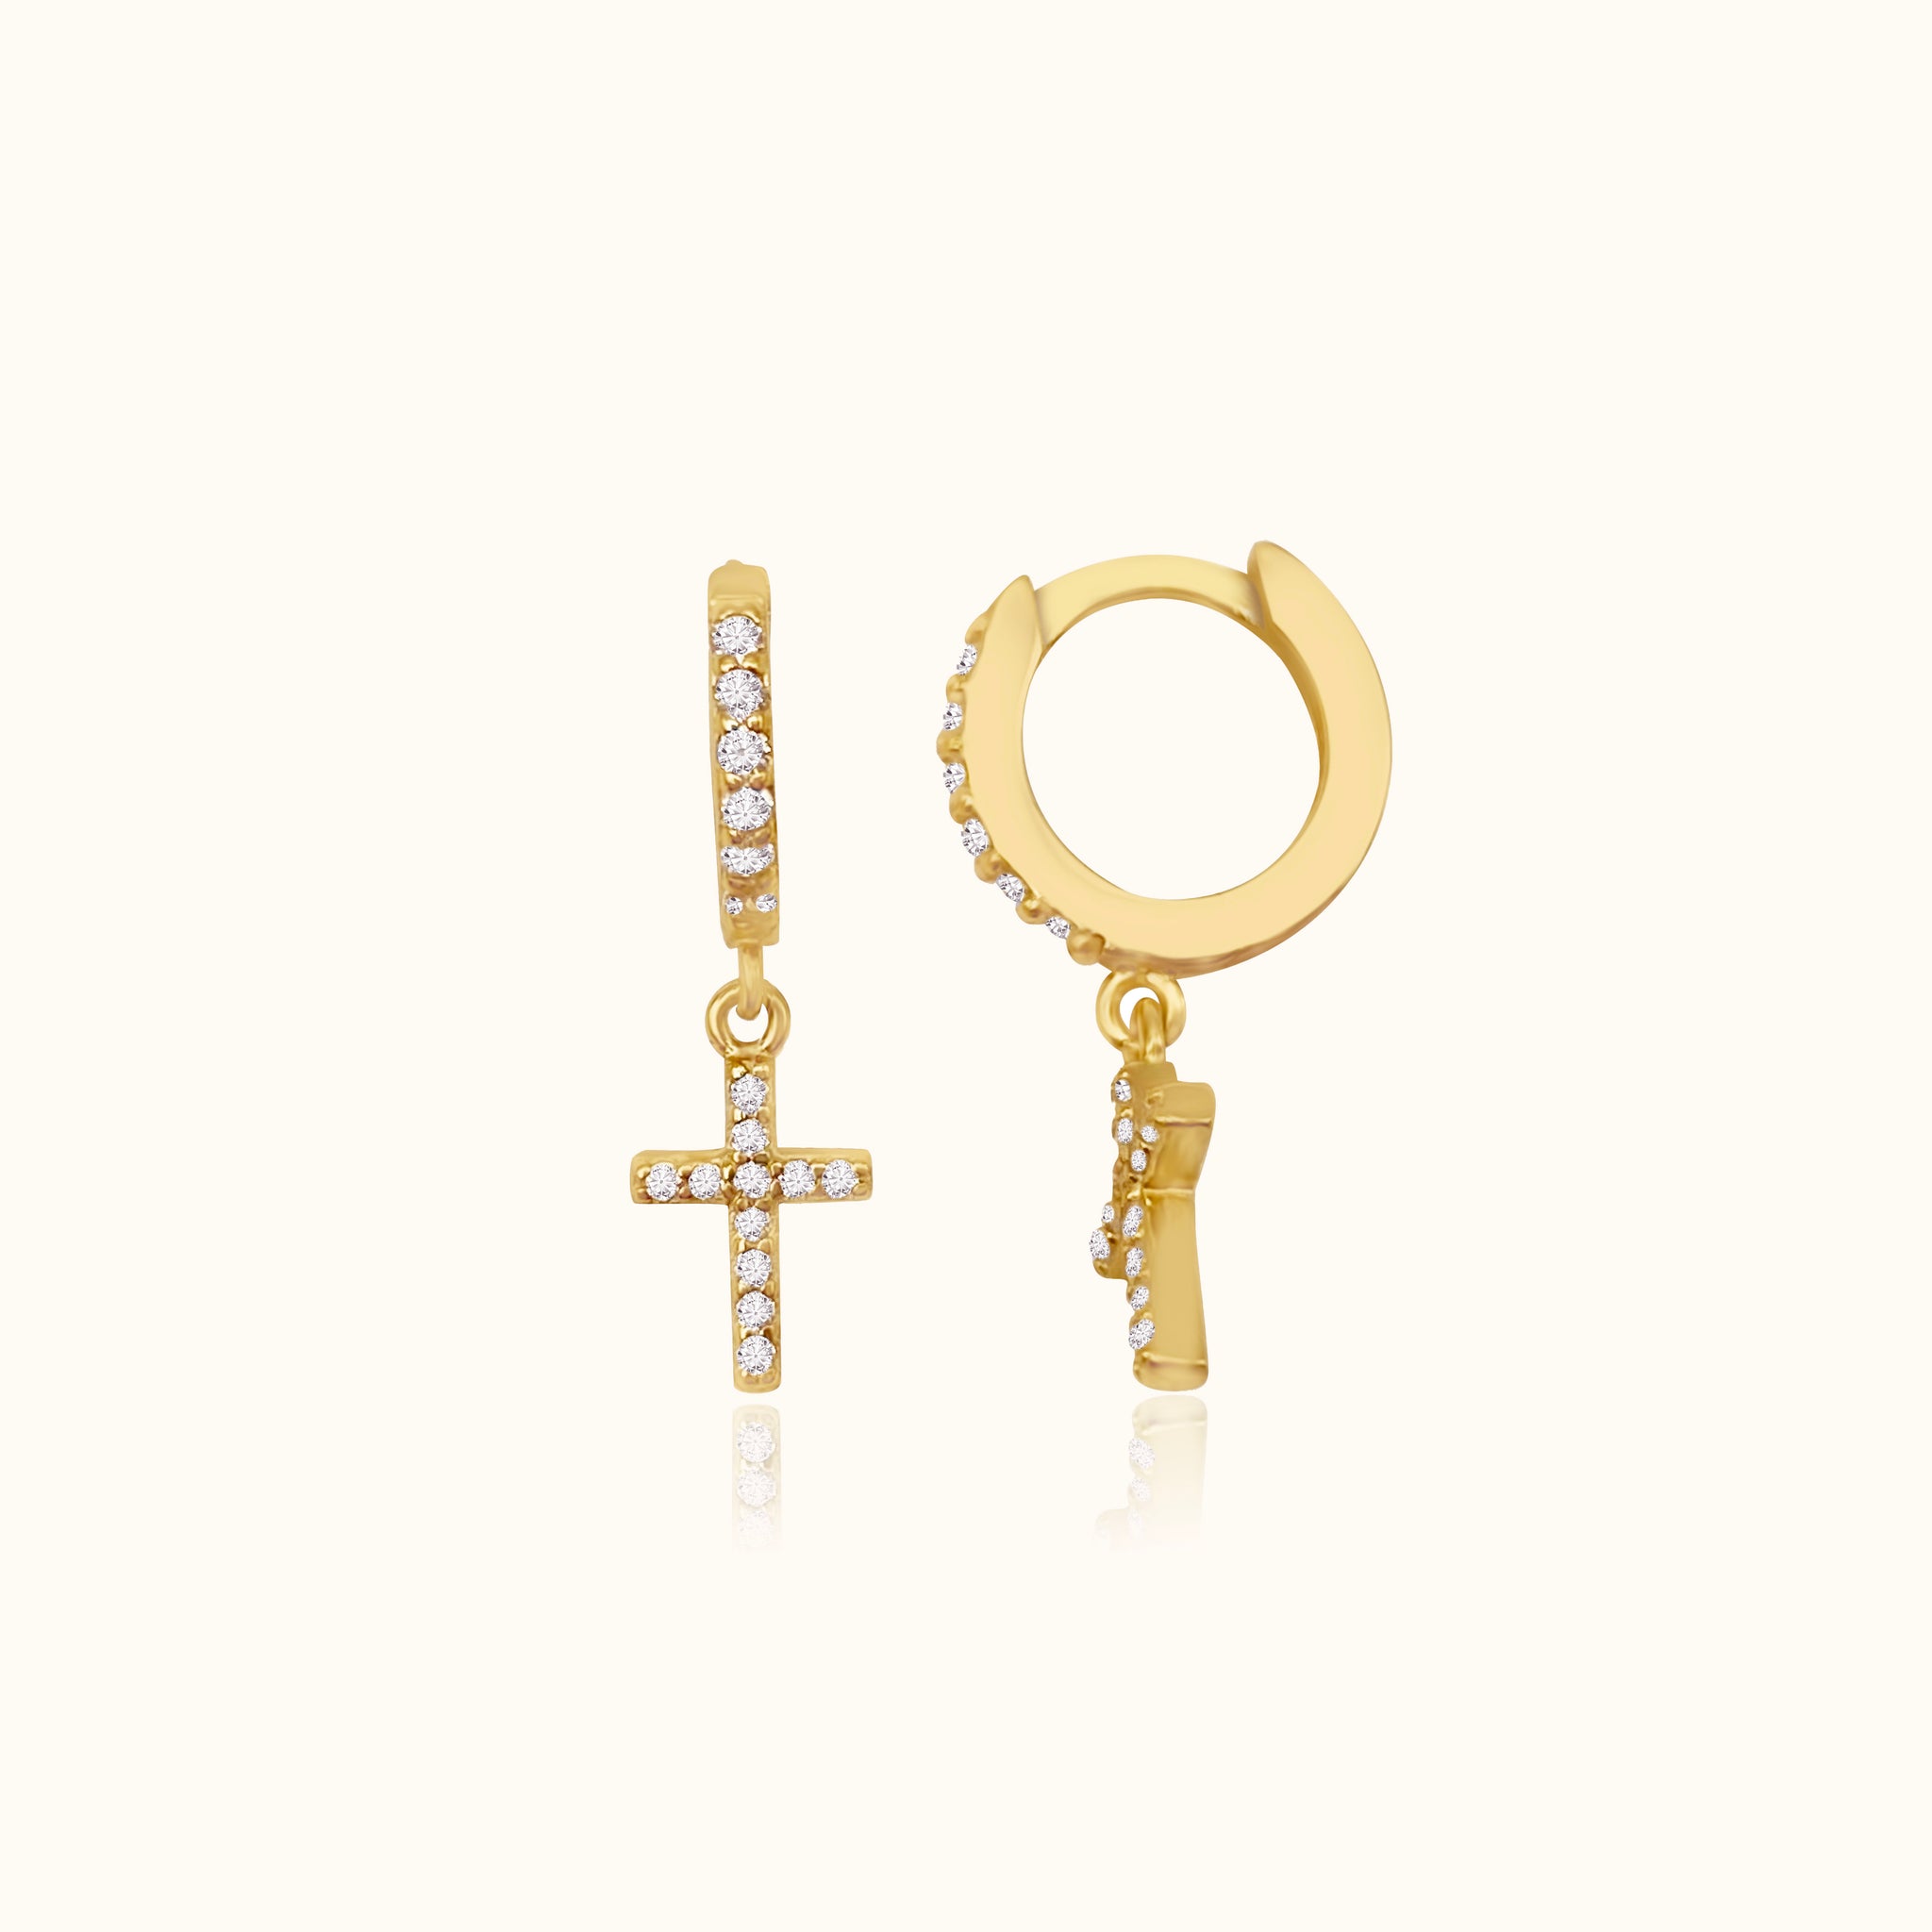 Diamond Cross Hoop Earrings Gold Hanging Studded Tiny CZ Pave Cross Huggie Hoops by Doviana